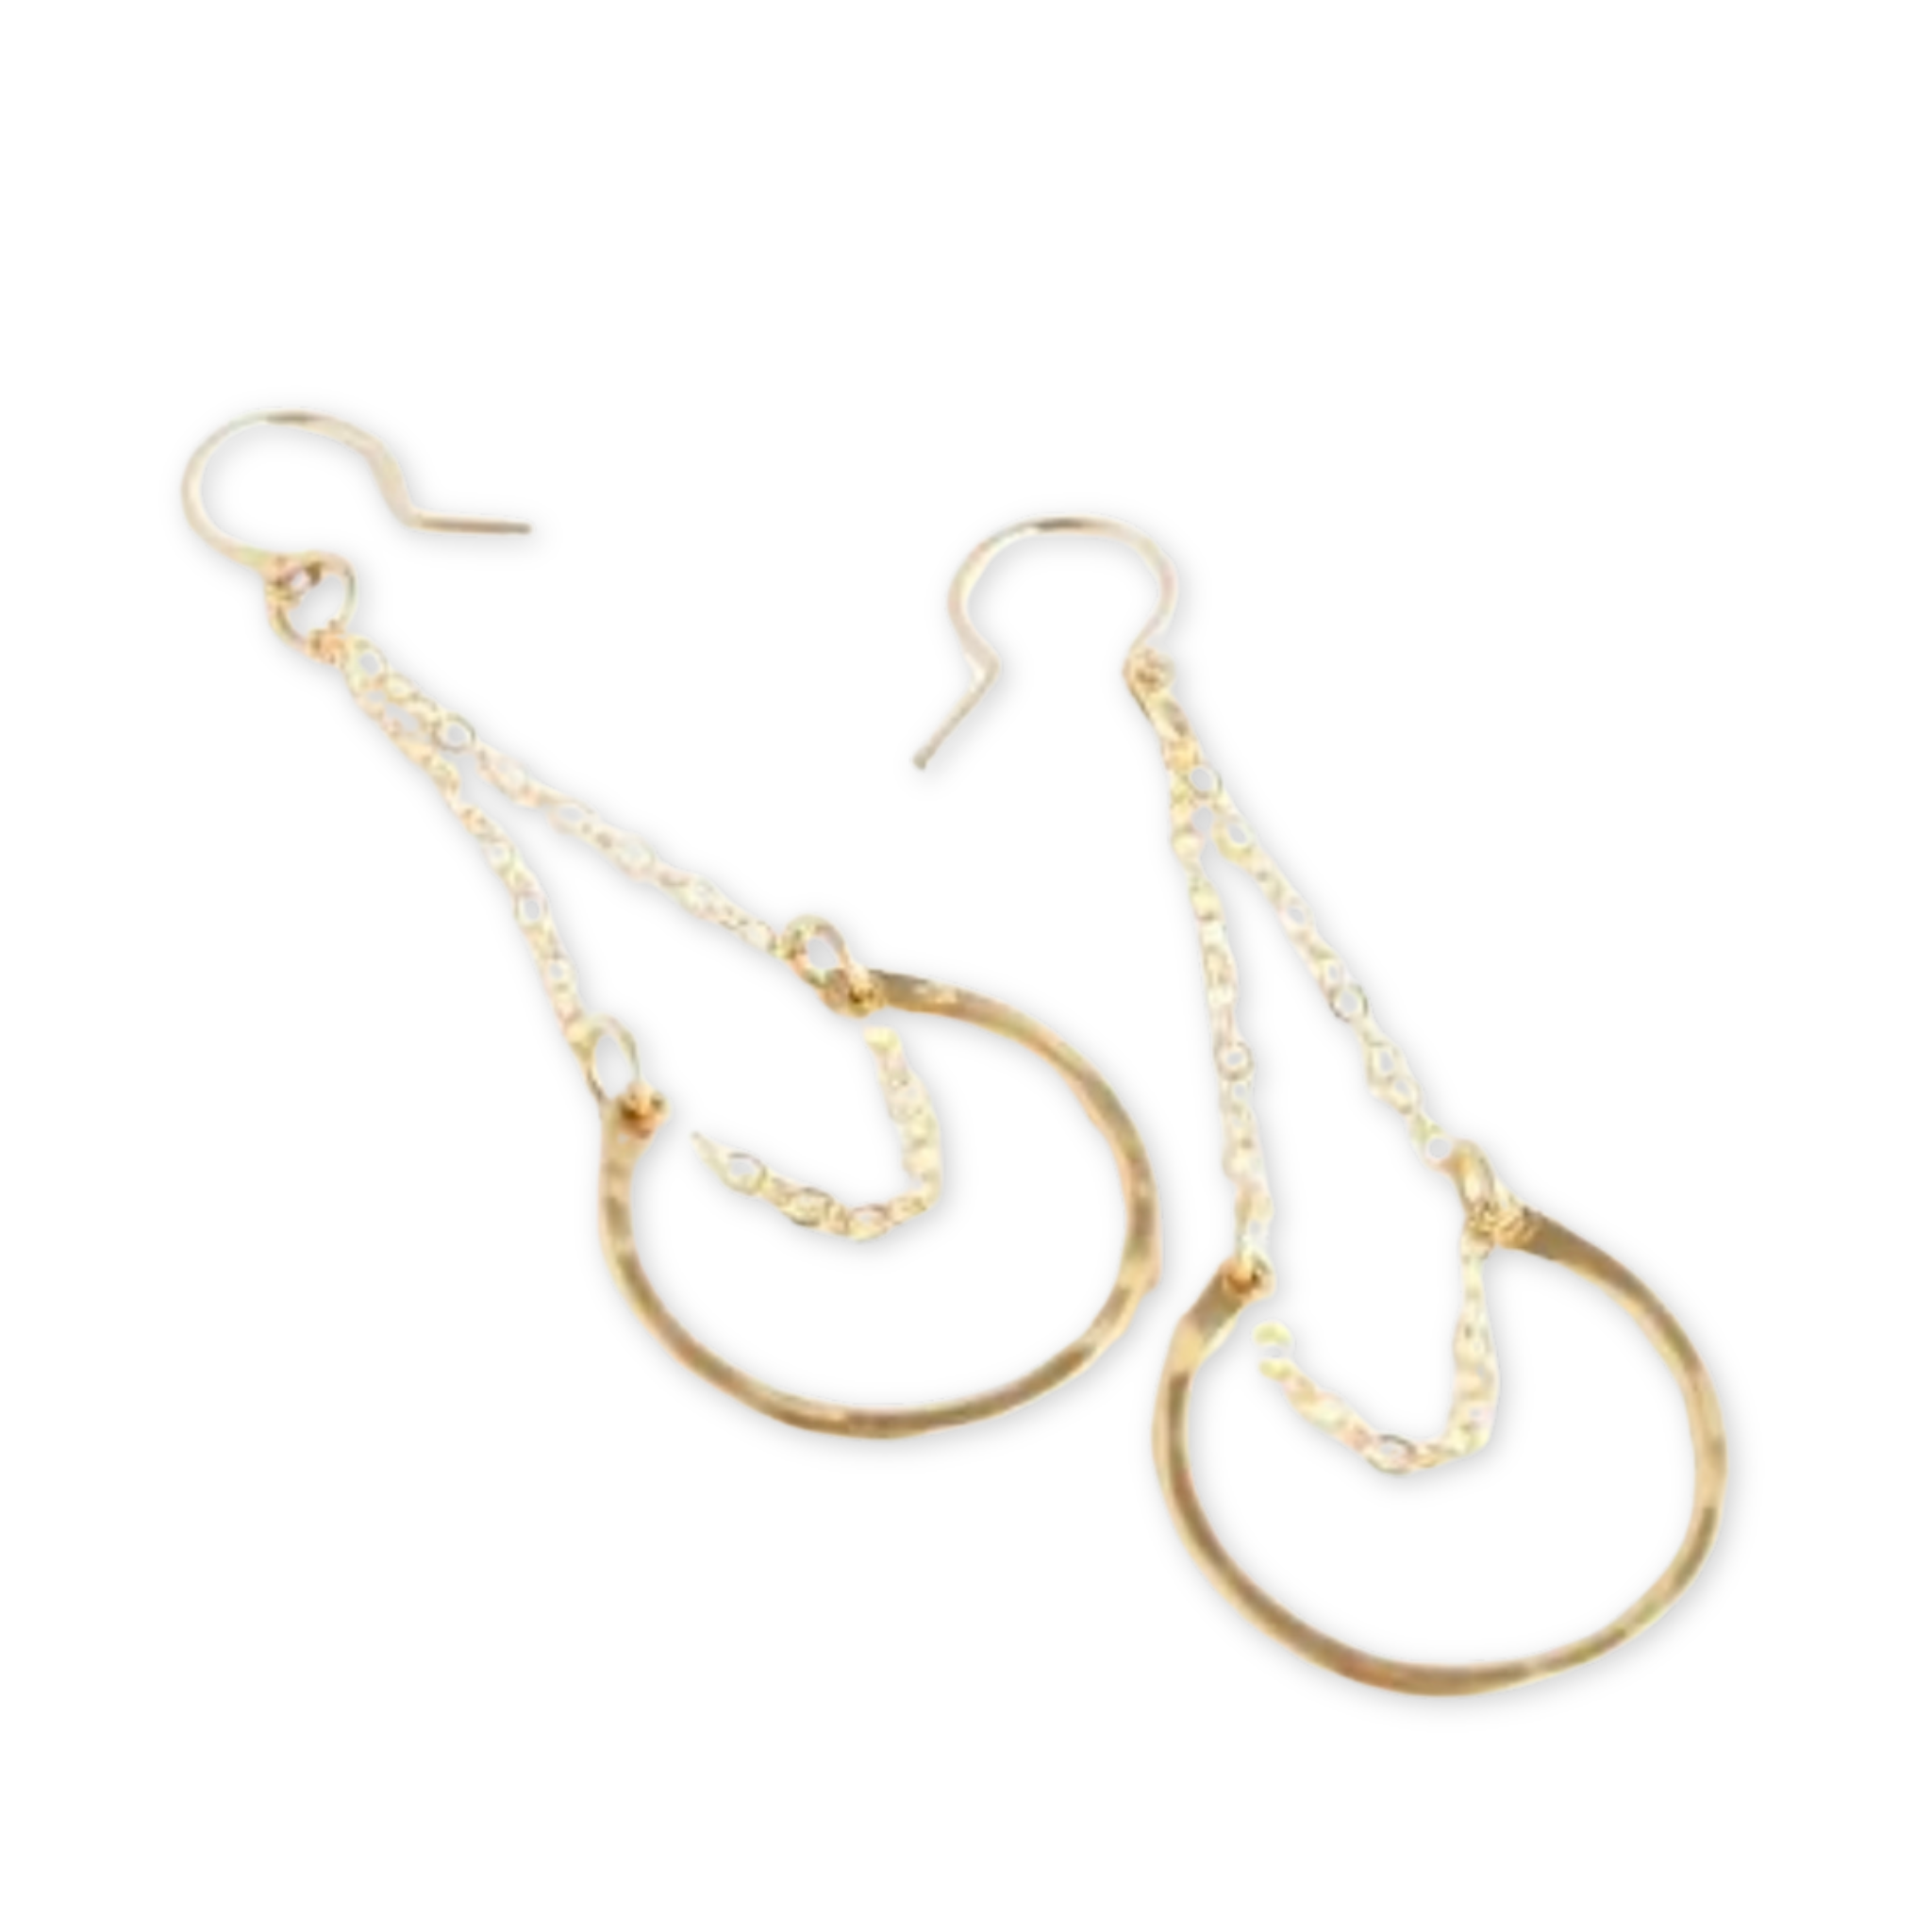 horseshoe inspired earrings on a dainty chain